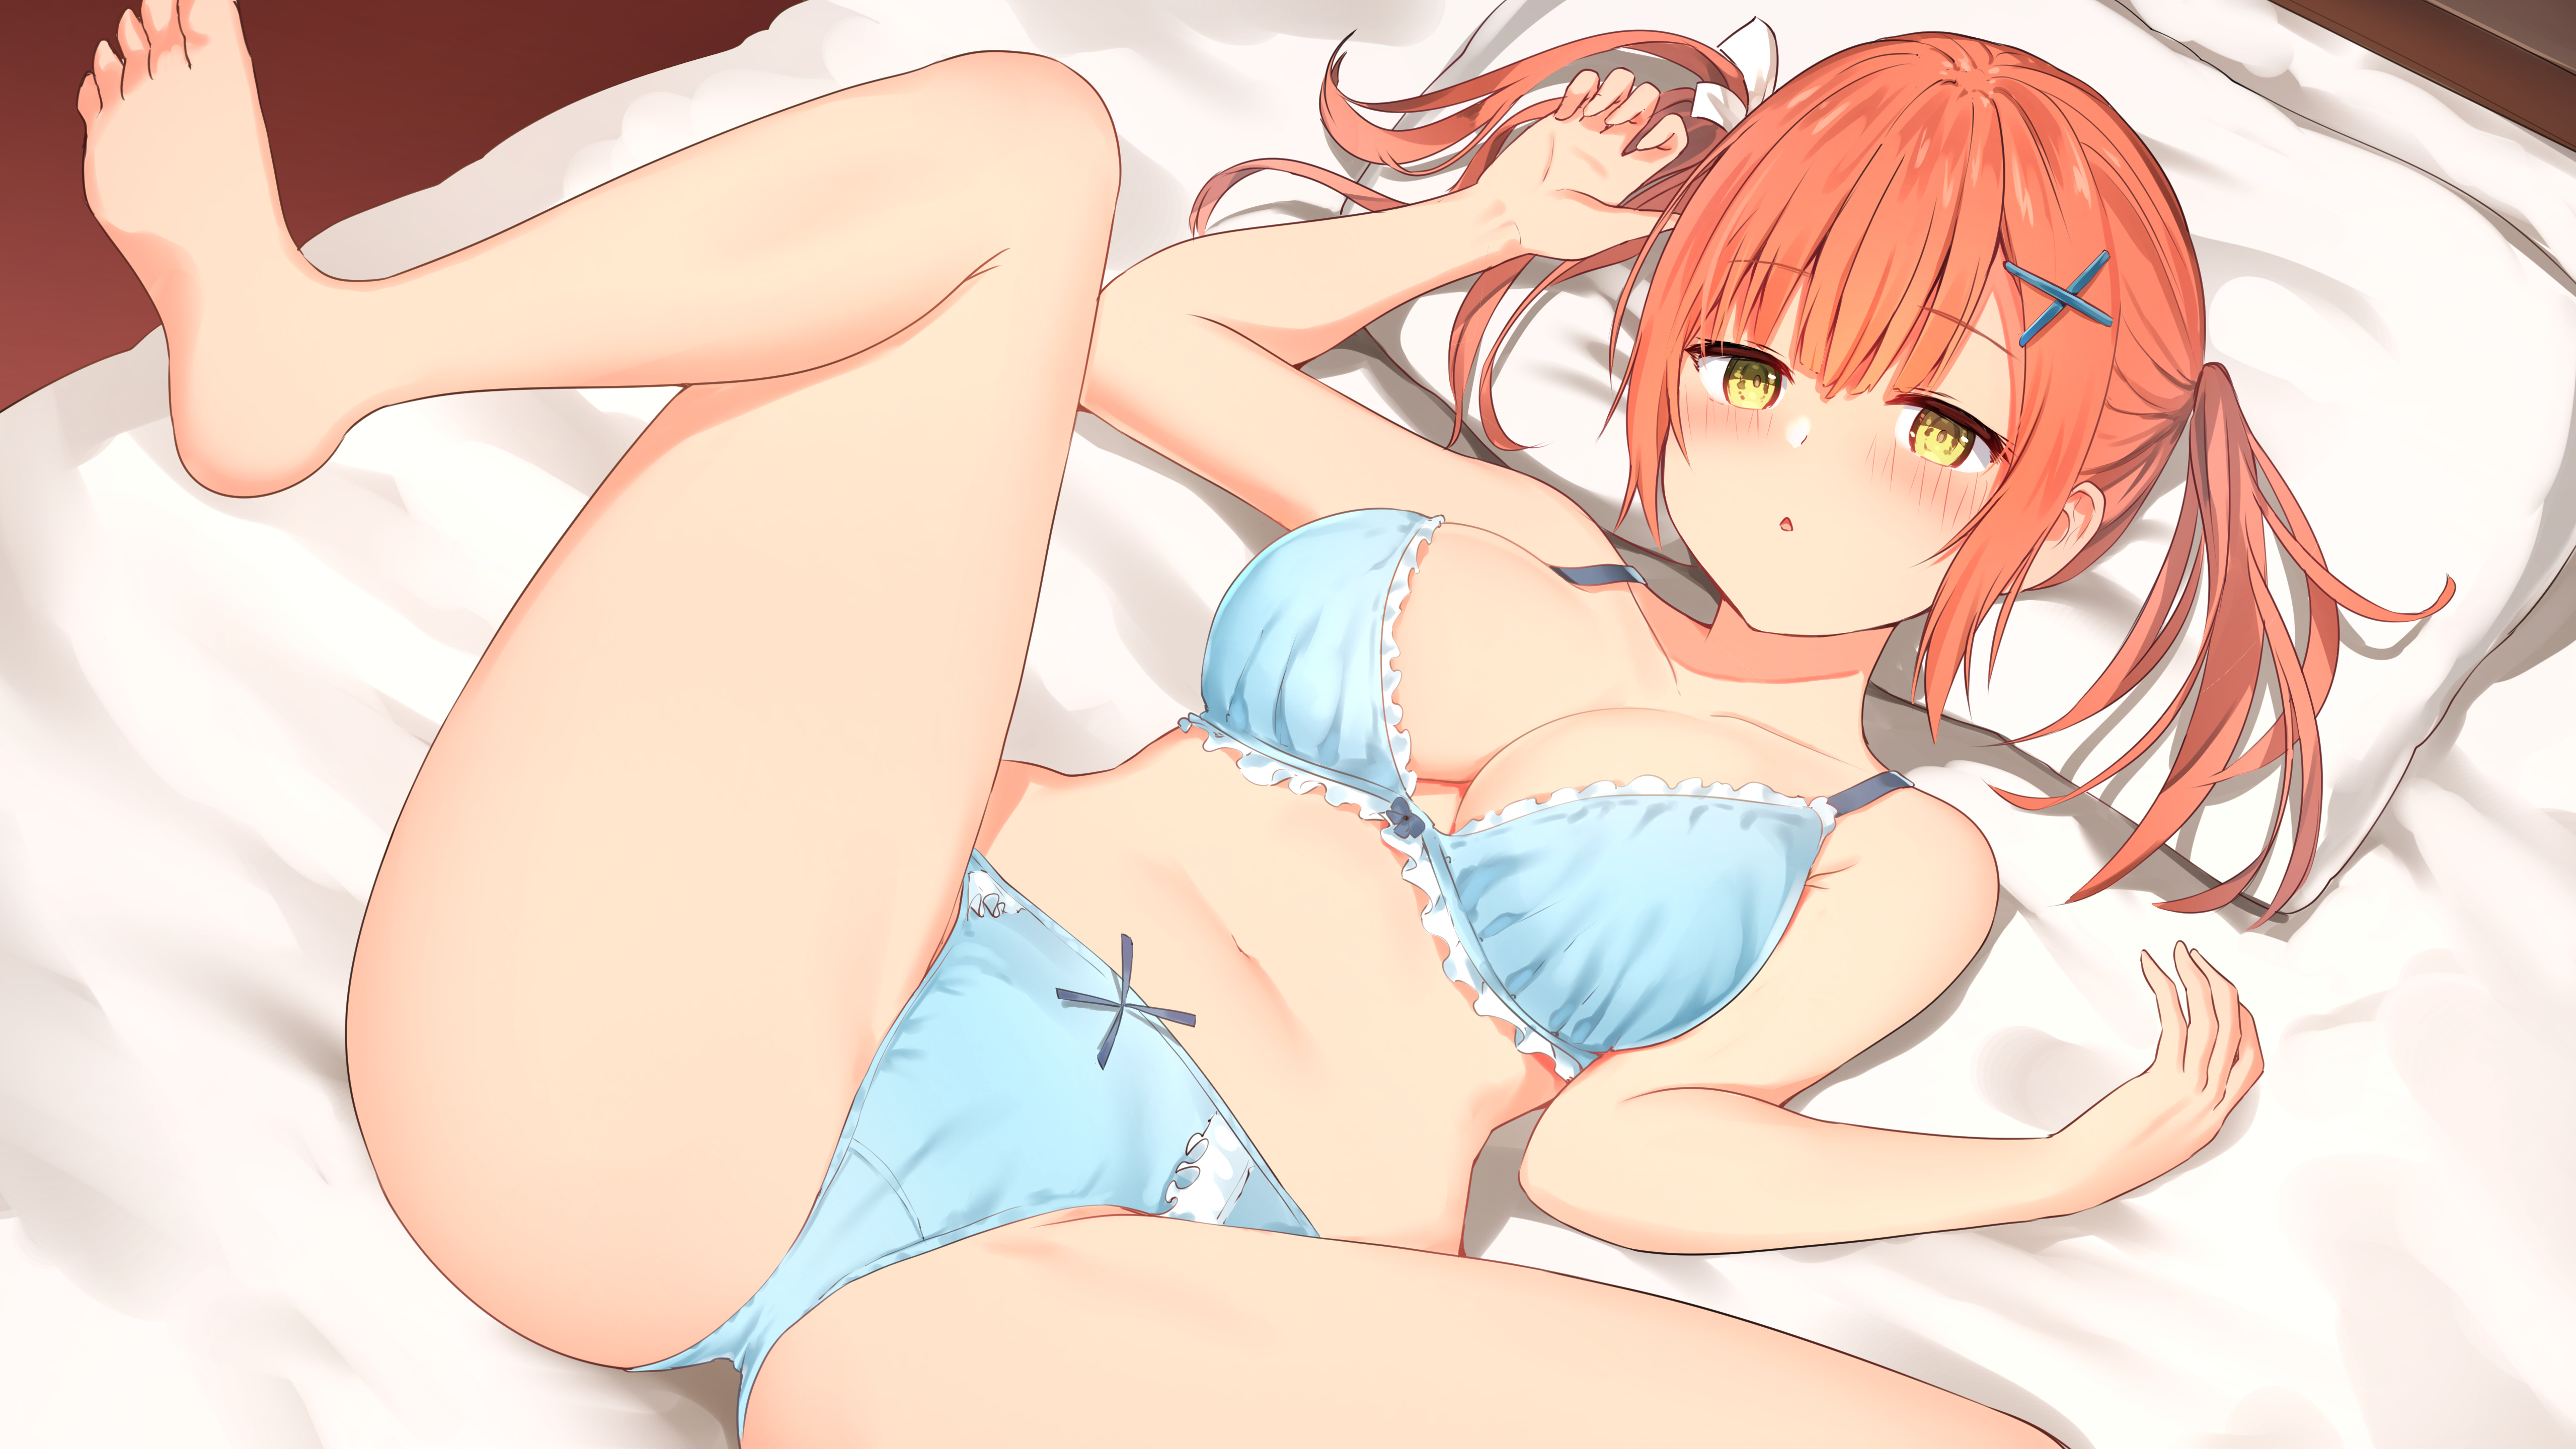 Anime 5119x2880 anime anime girls Sune artwork redhead yellow eyes blushing in bed underwear cleavage legs up spread legs